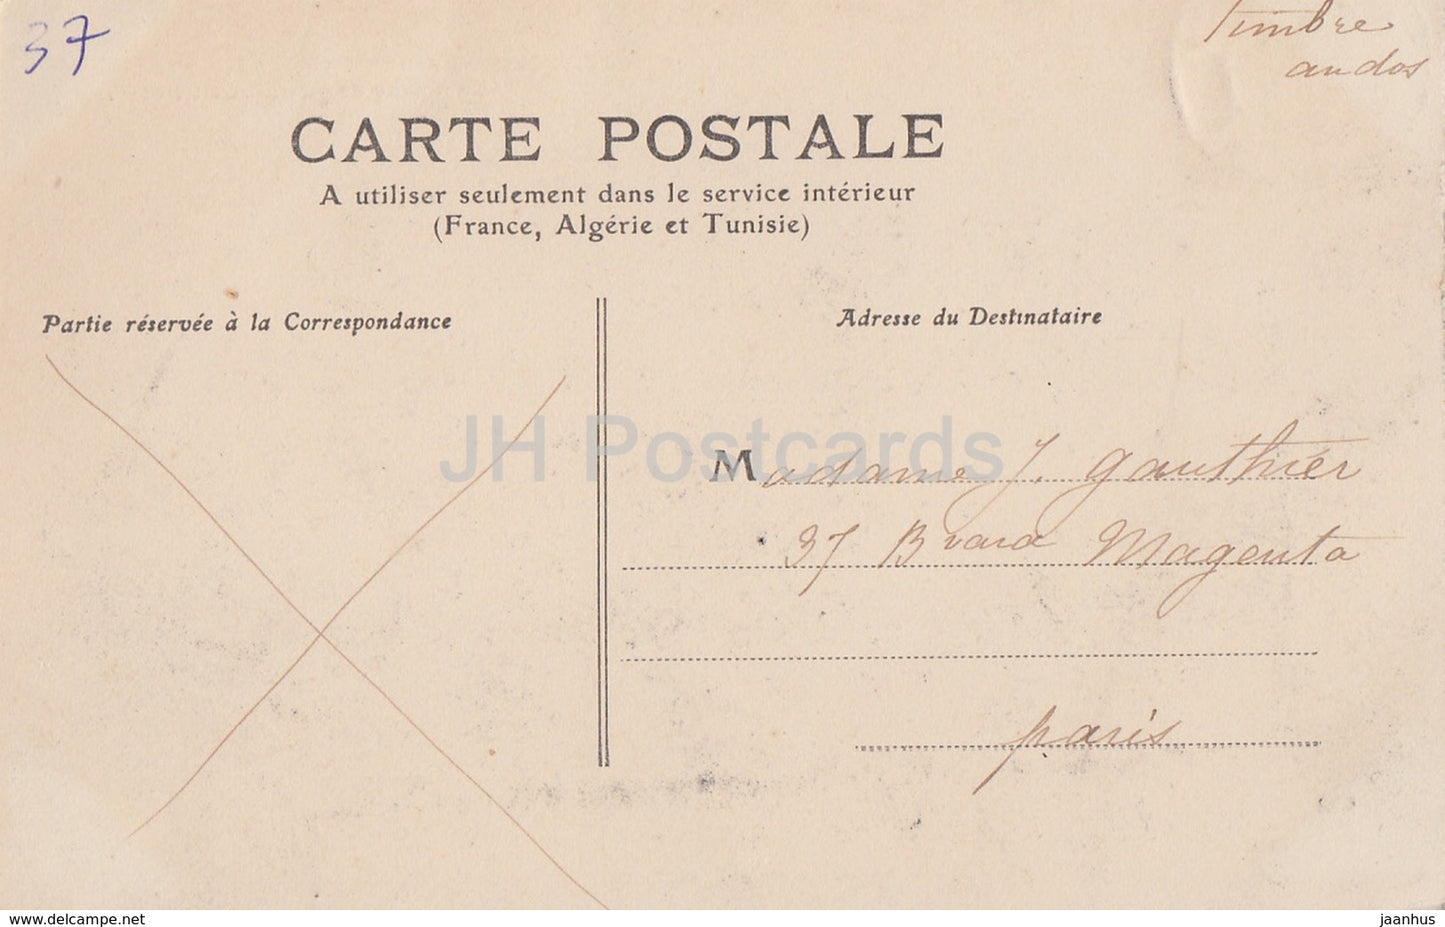 Commune de Nouzilly - Chateau de l'Orfraisiere - Schloss - 2 - alte Postkarte - Frankreich - gebraucht